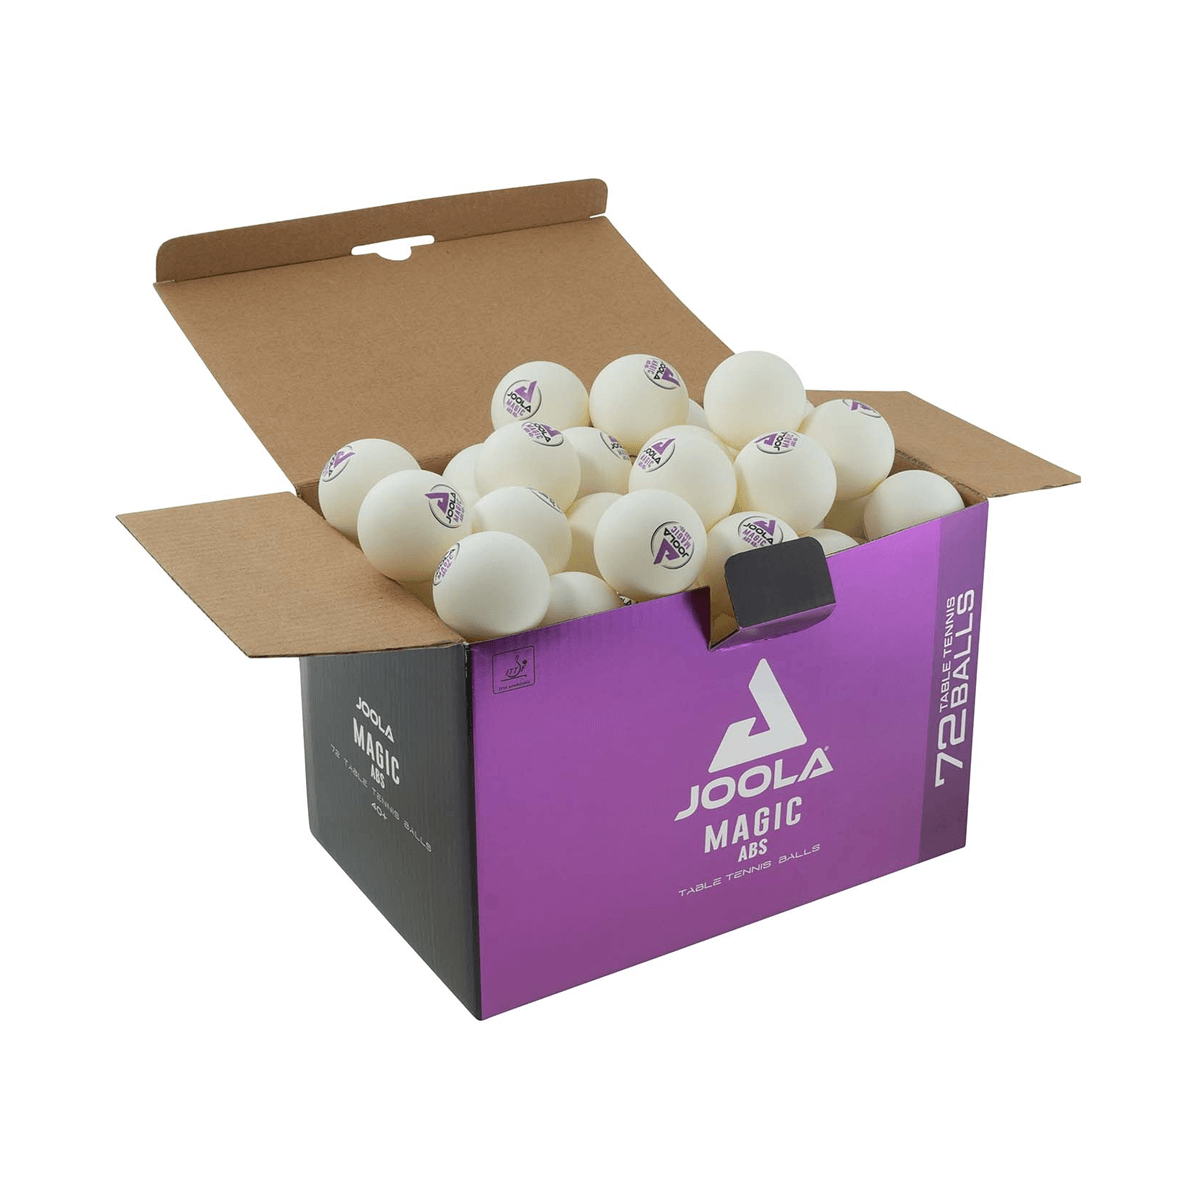 JOOLA Magic ABS 2-Star Training Table Tennis Balls (72 Pack)